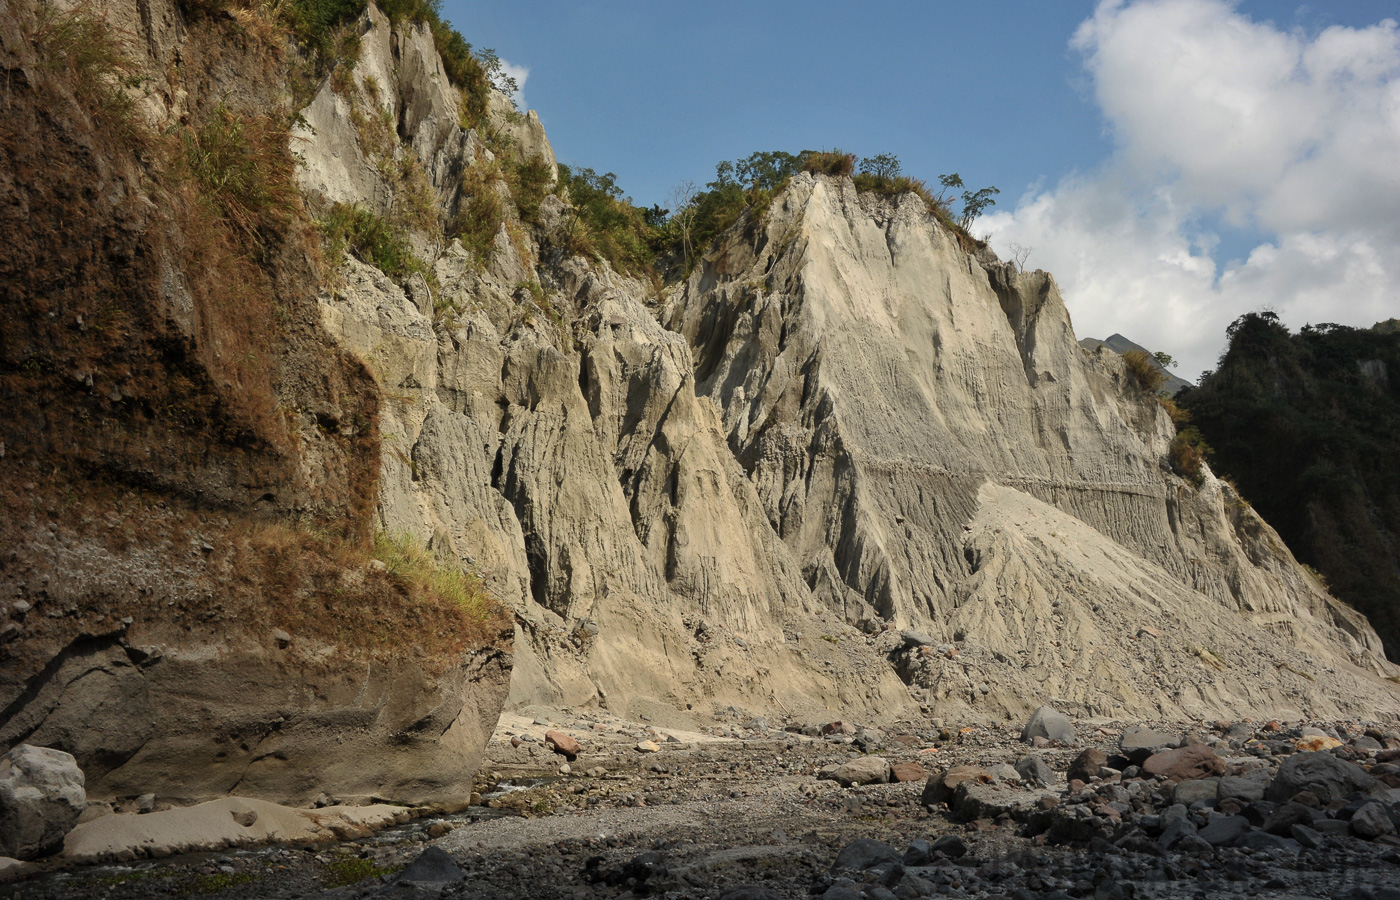 Mount Pinatubo [38 mm, 1/200 sec at f / 22, ISO 400]